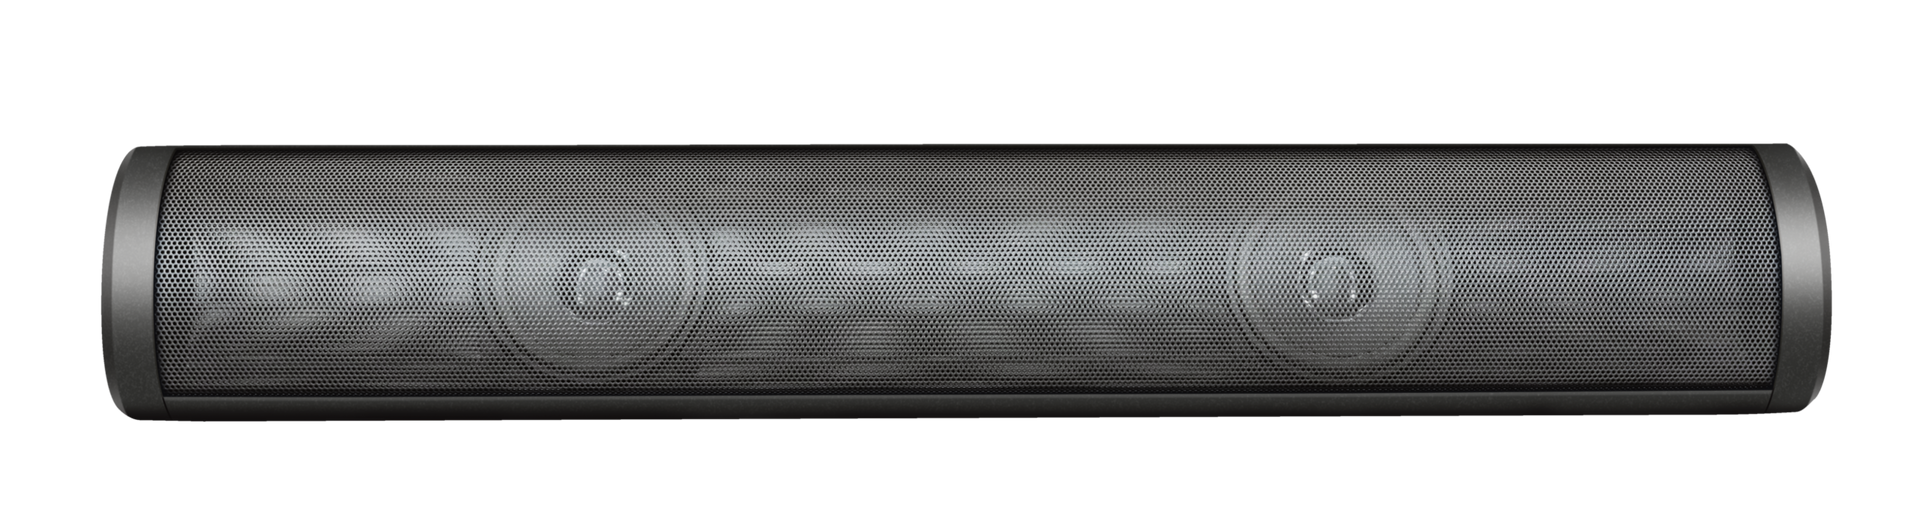 GXT 664 Unca 2.1 Soundbar Speaker Set-Front